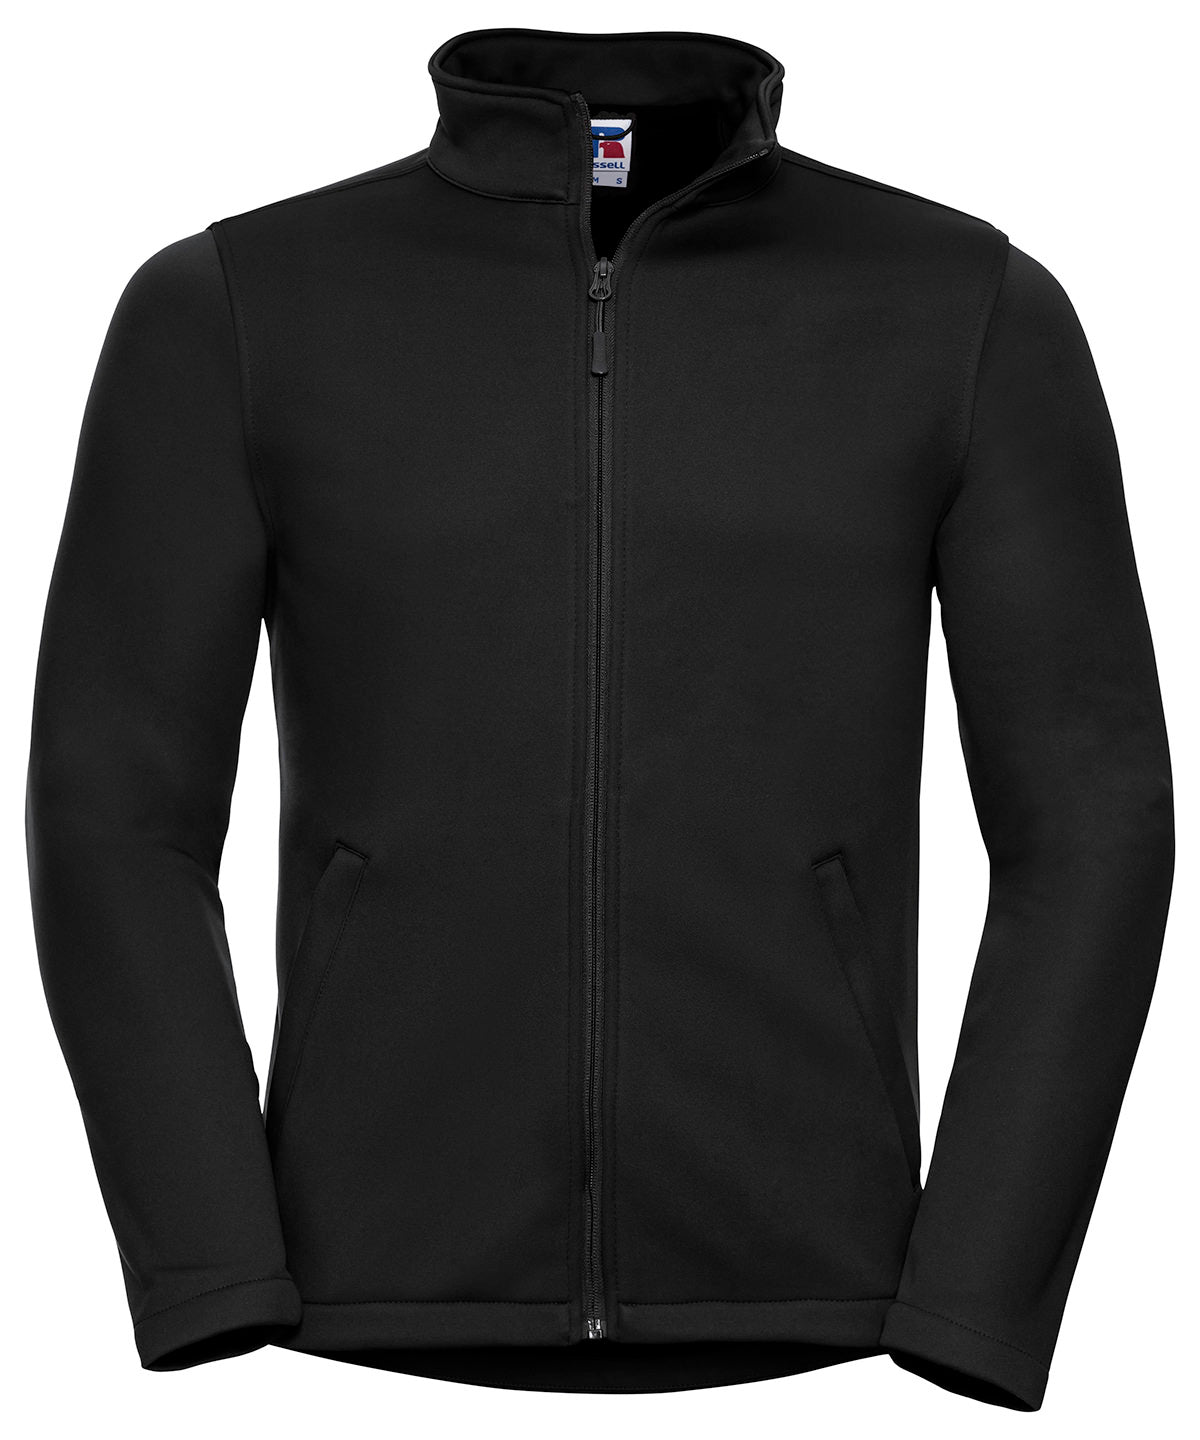 Personalised Jackets - Black Russell Europe Smart softshell jacket